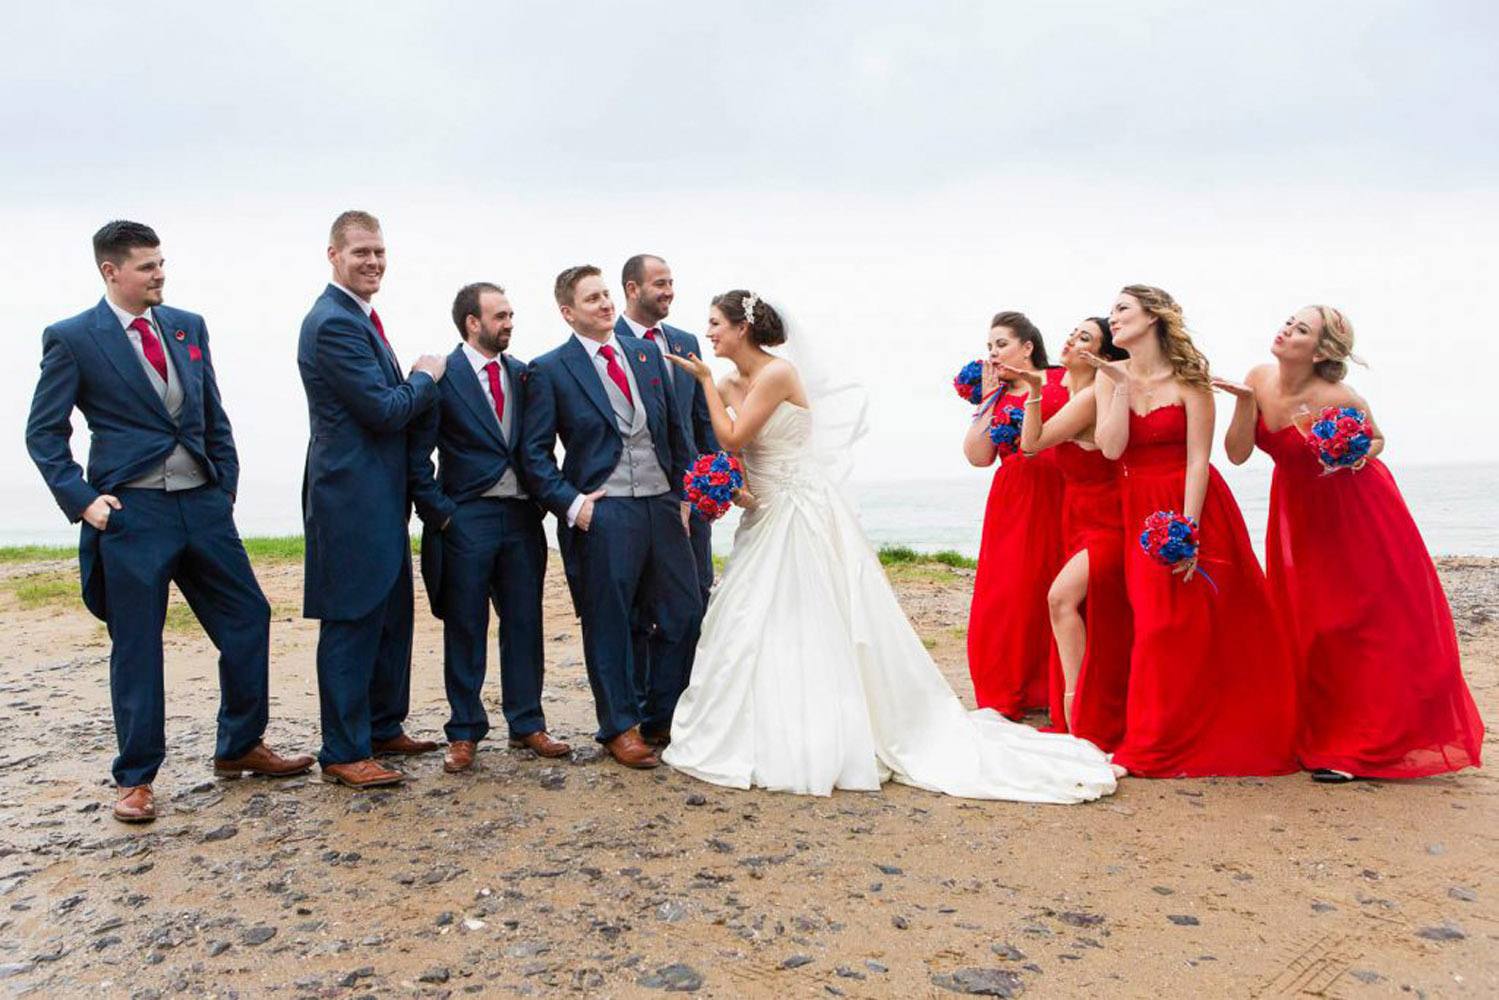 Morlove Wedding Photography - Charlene Lovesy - Epic Marvel Superhero Themed Beach Wedding - Lauren & Gavin - Oxwich Bay, Beach